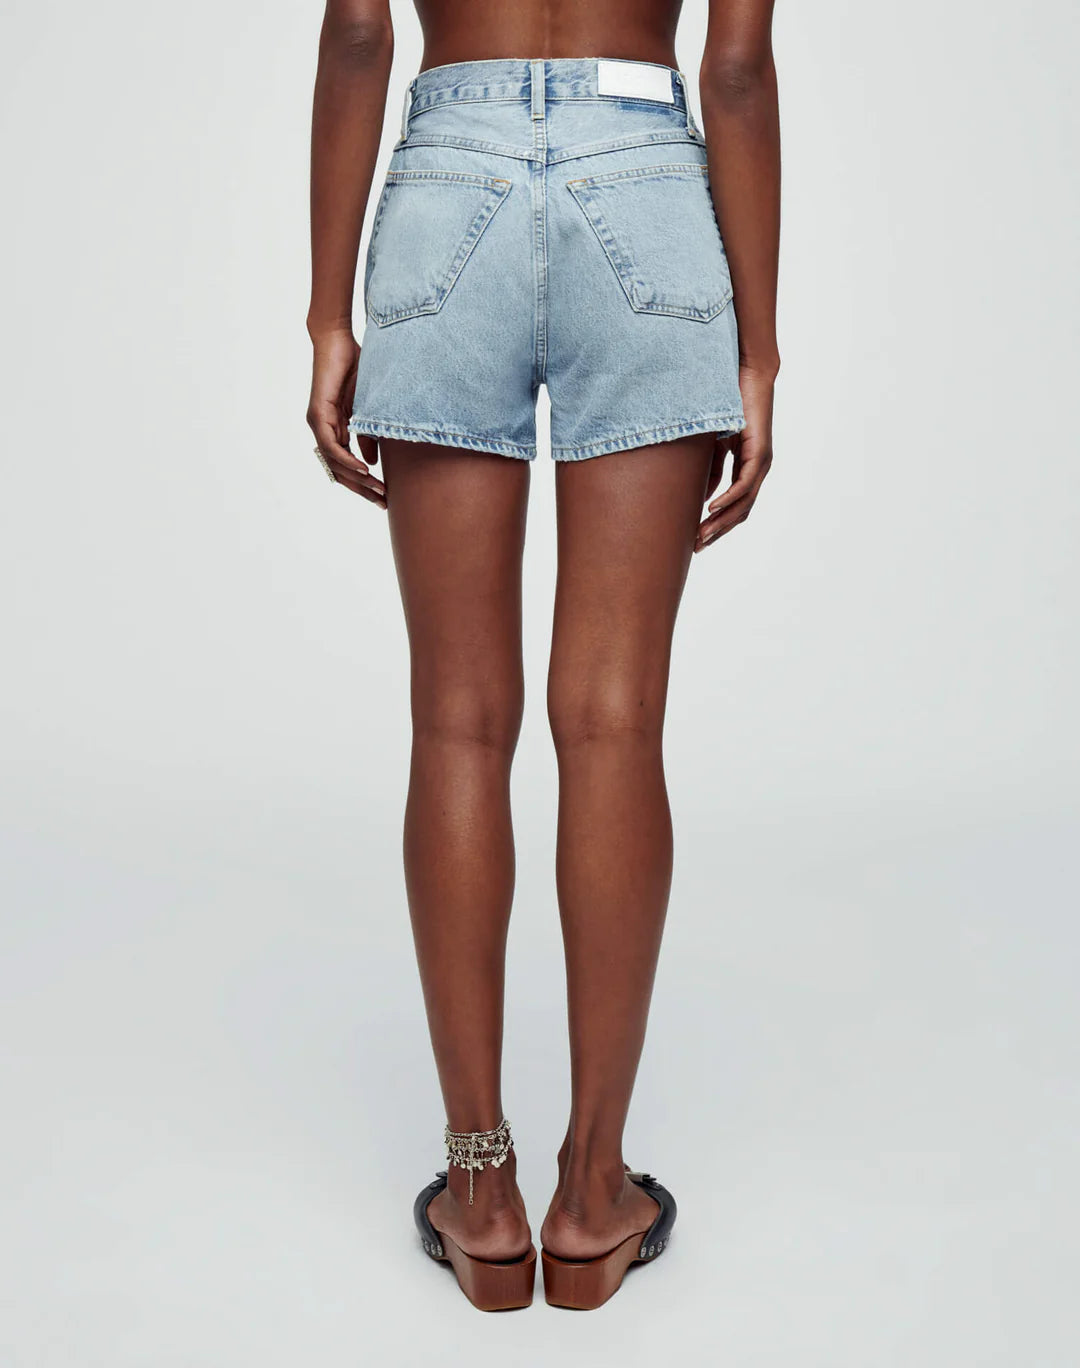 RE/DONE The Midi Short, jean shorts, denim shorts, shorts, women's clothing